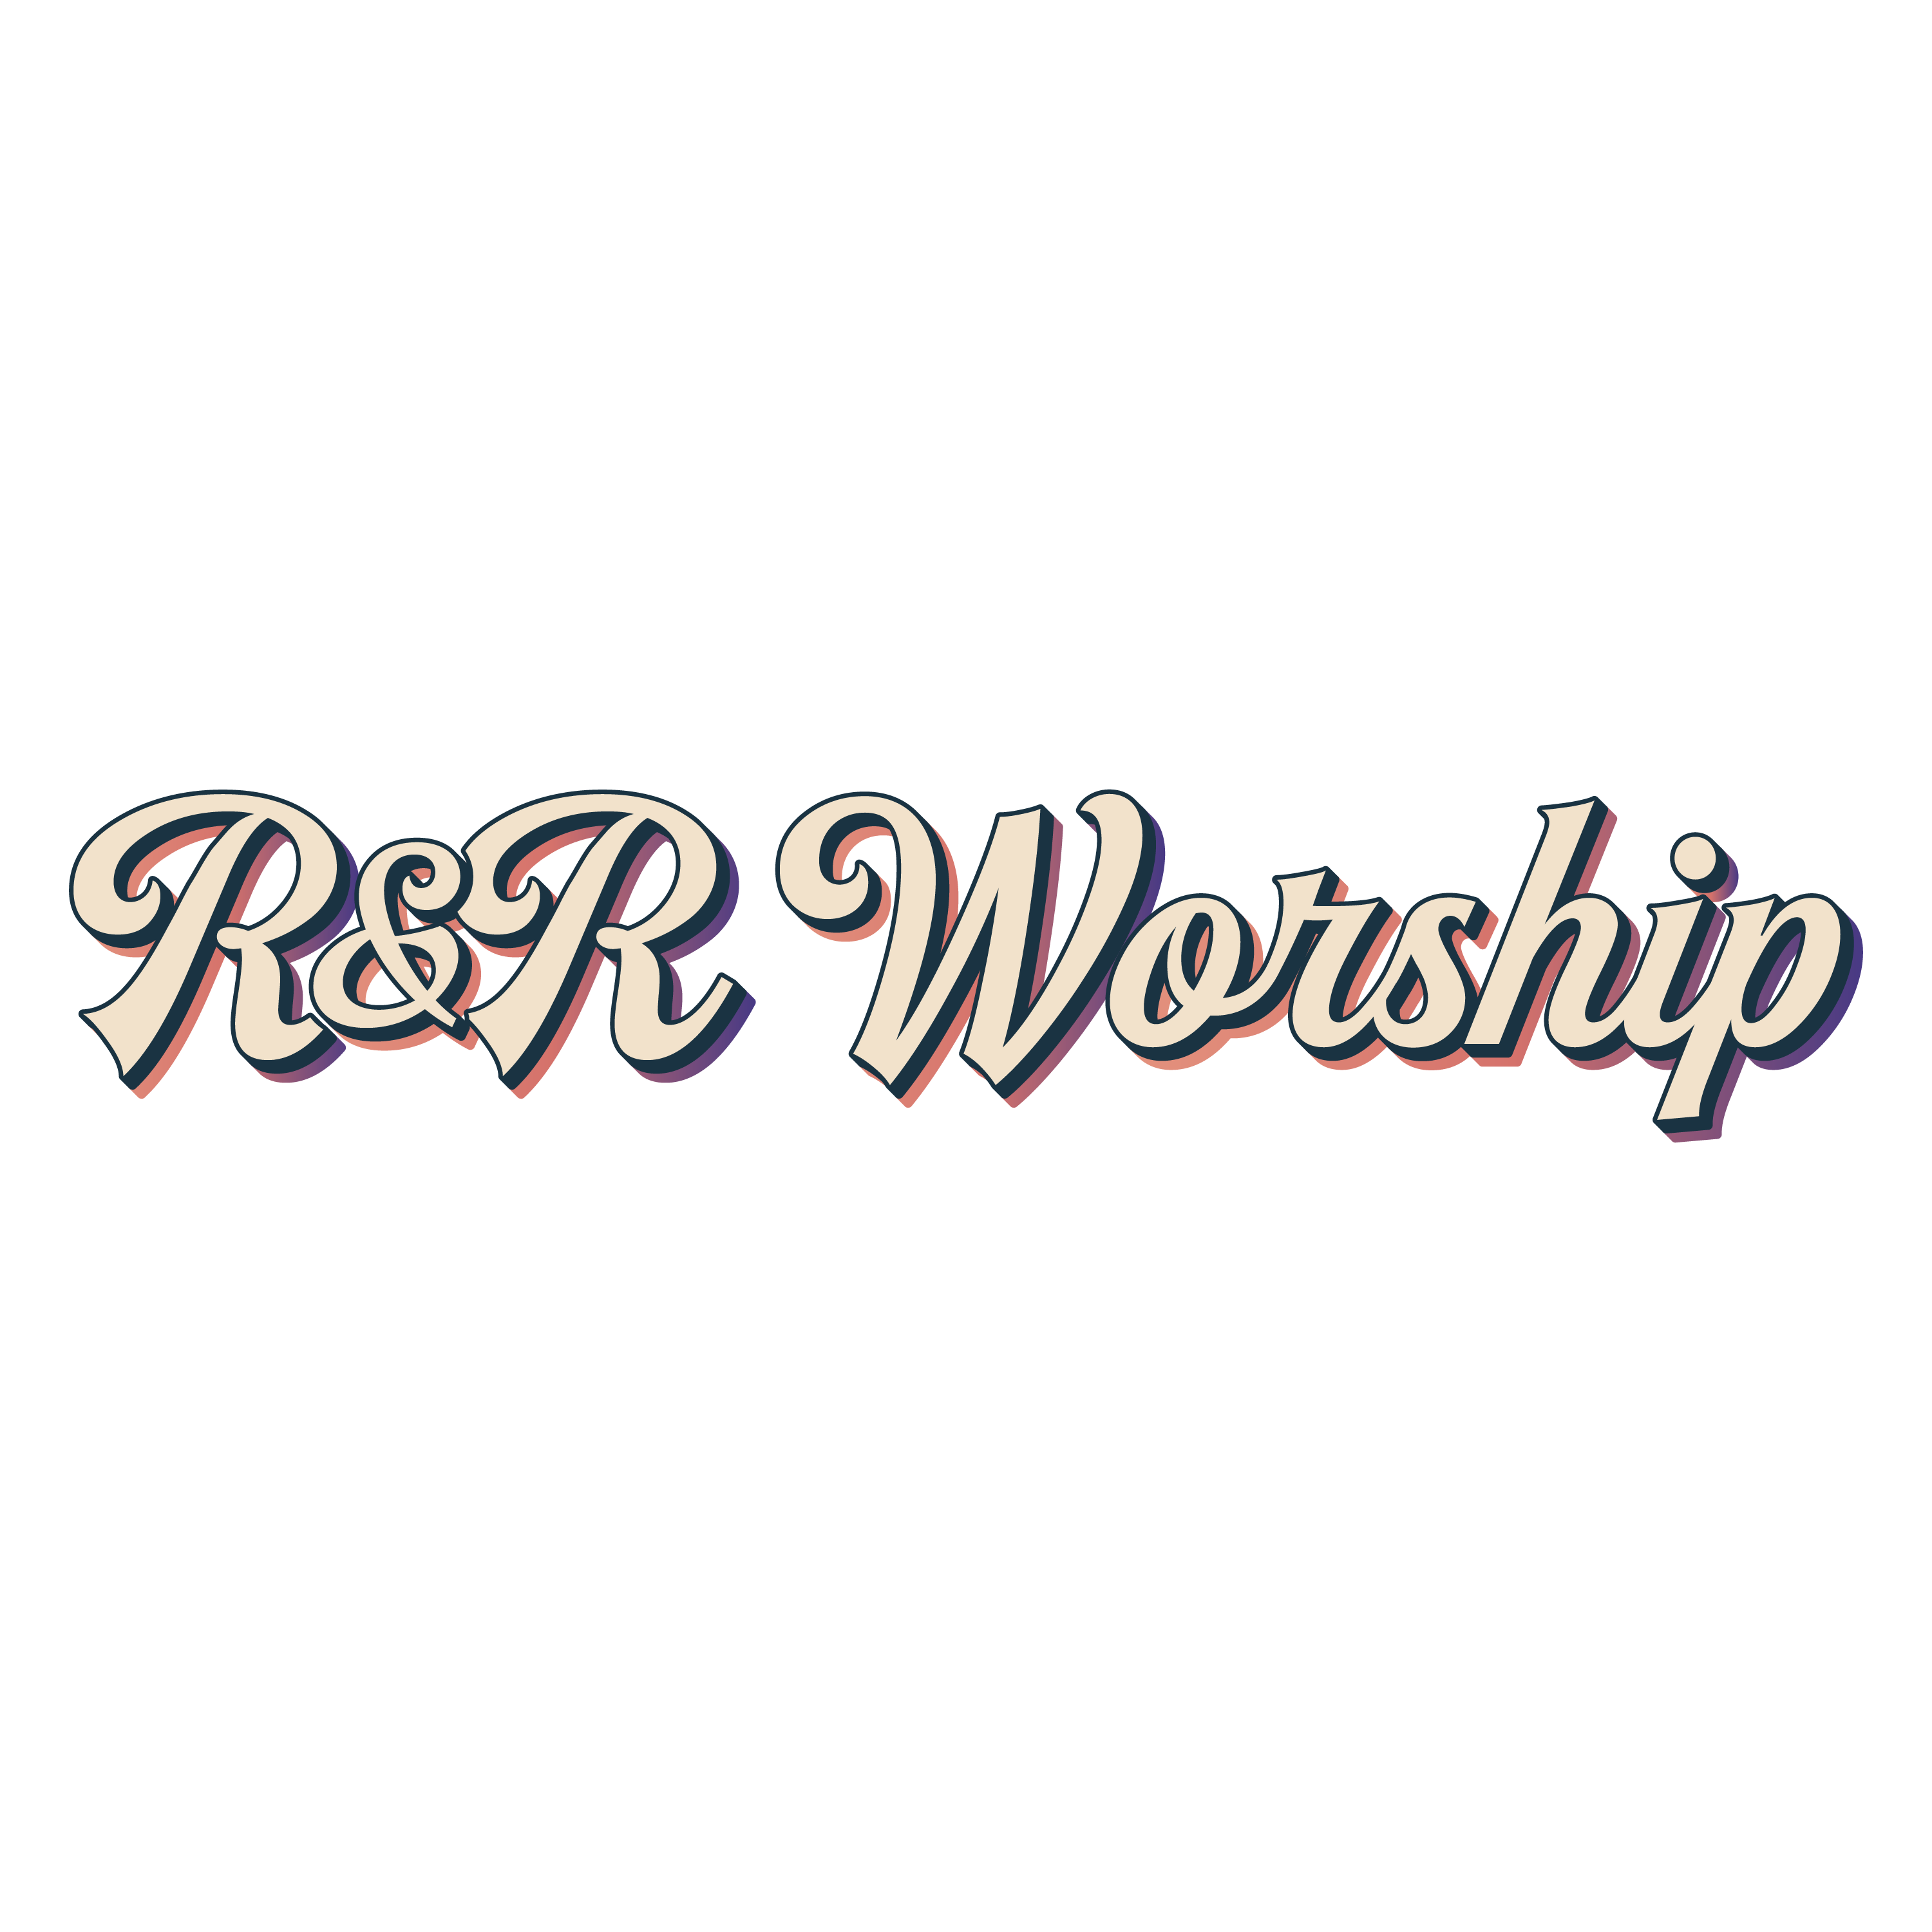 Rise & Rejoice Worship